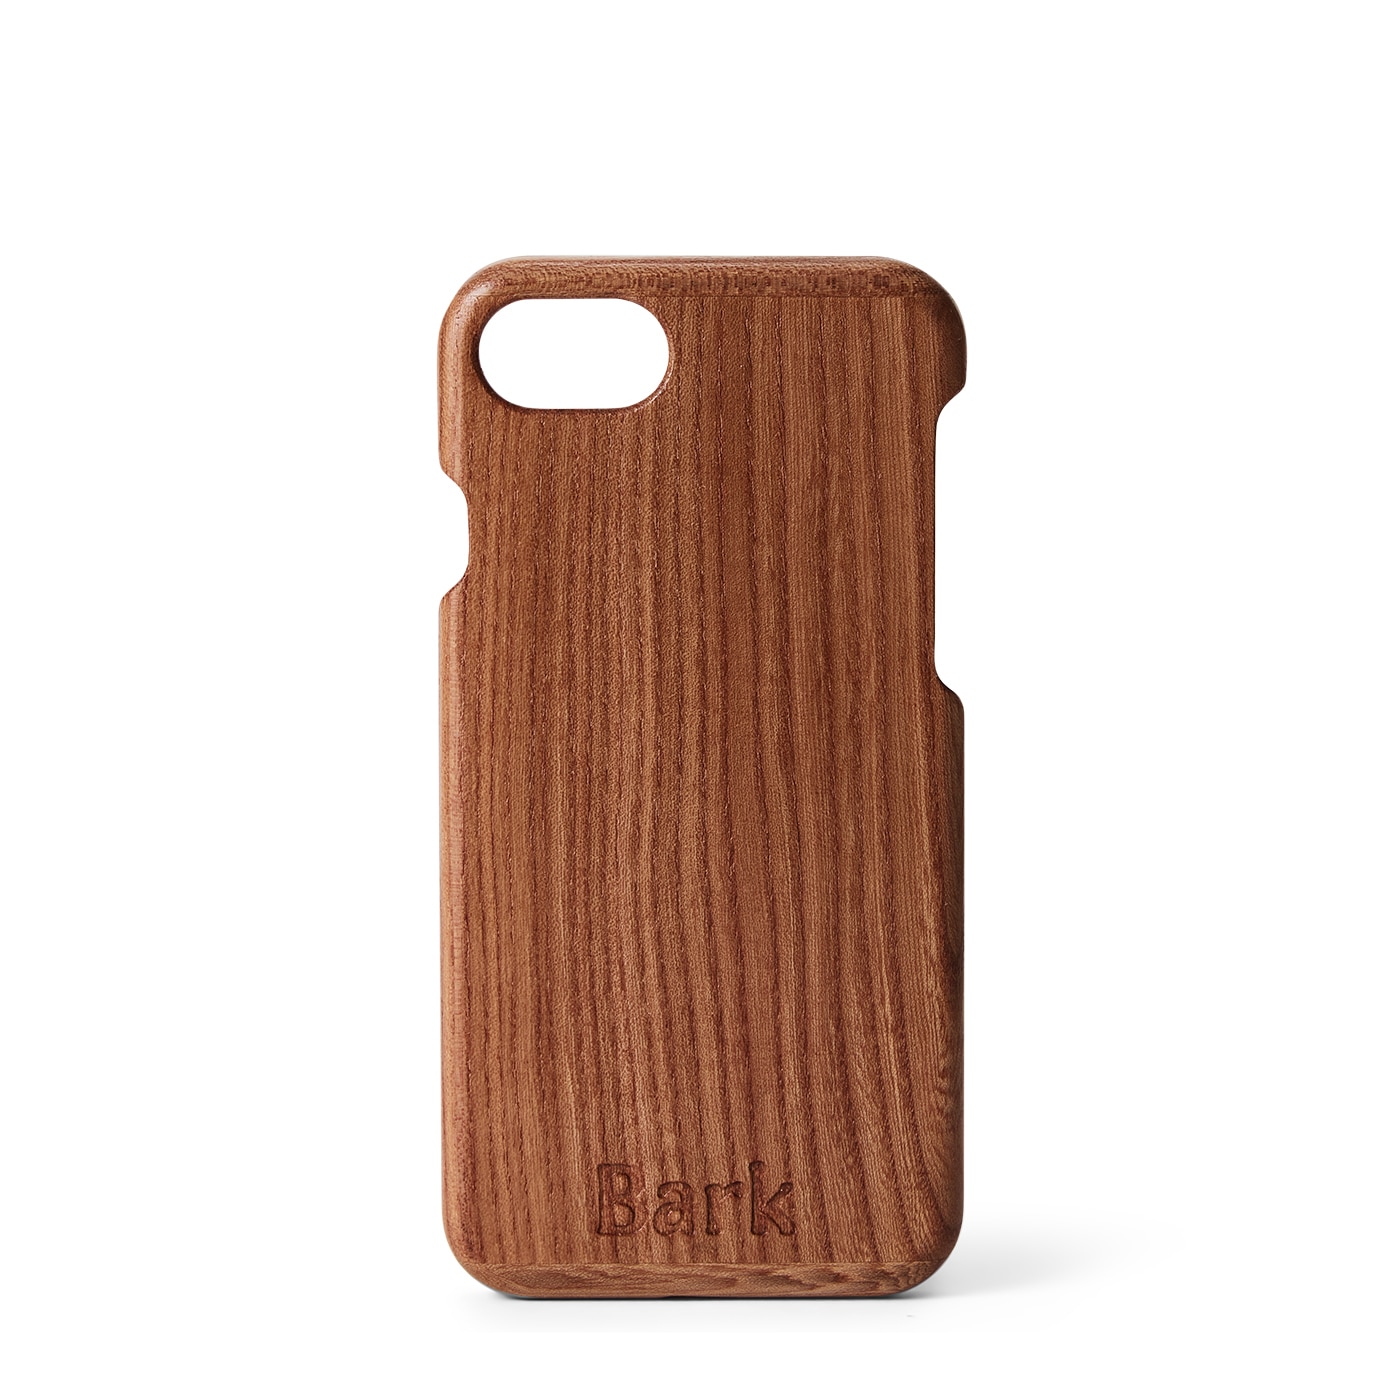 iPhone 8 case made of Swedish hardwood - Alm